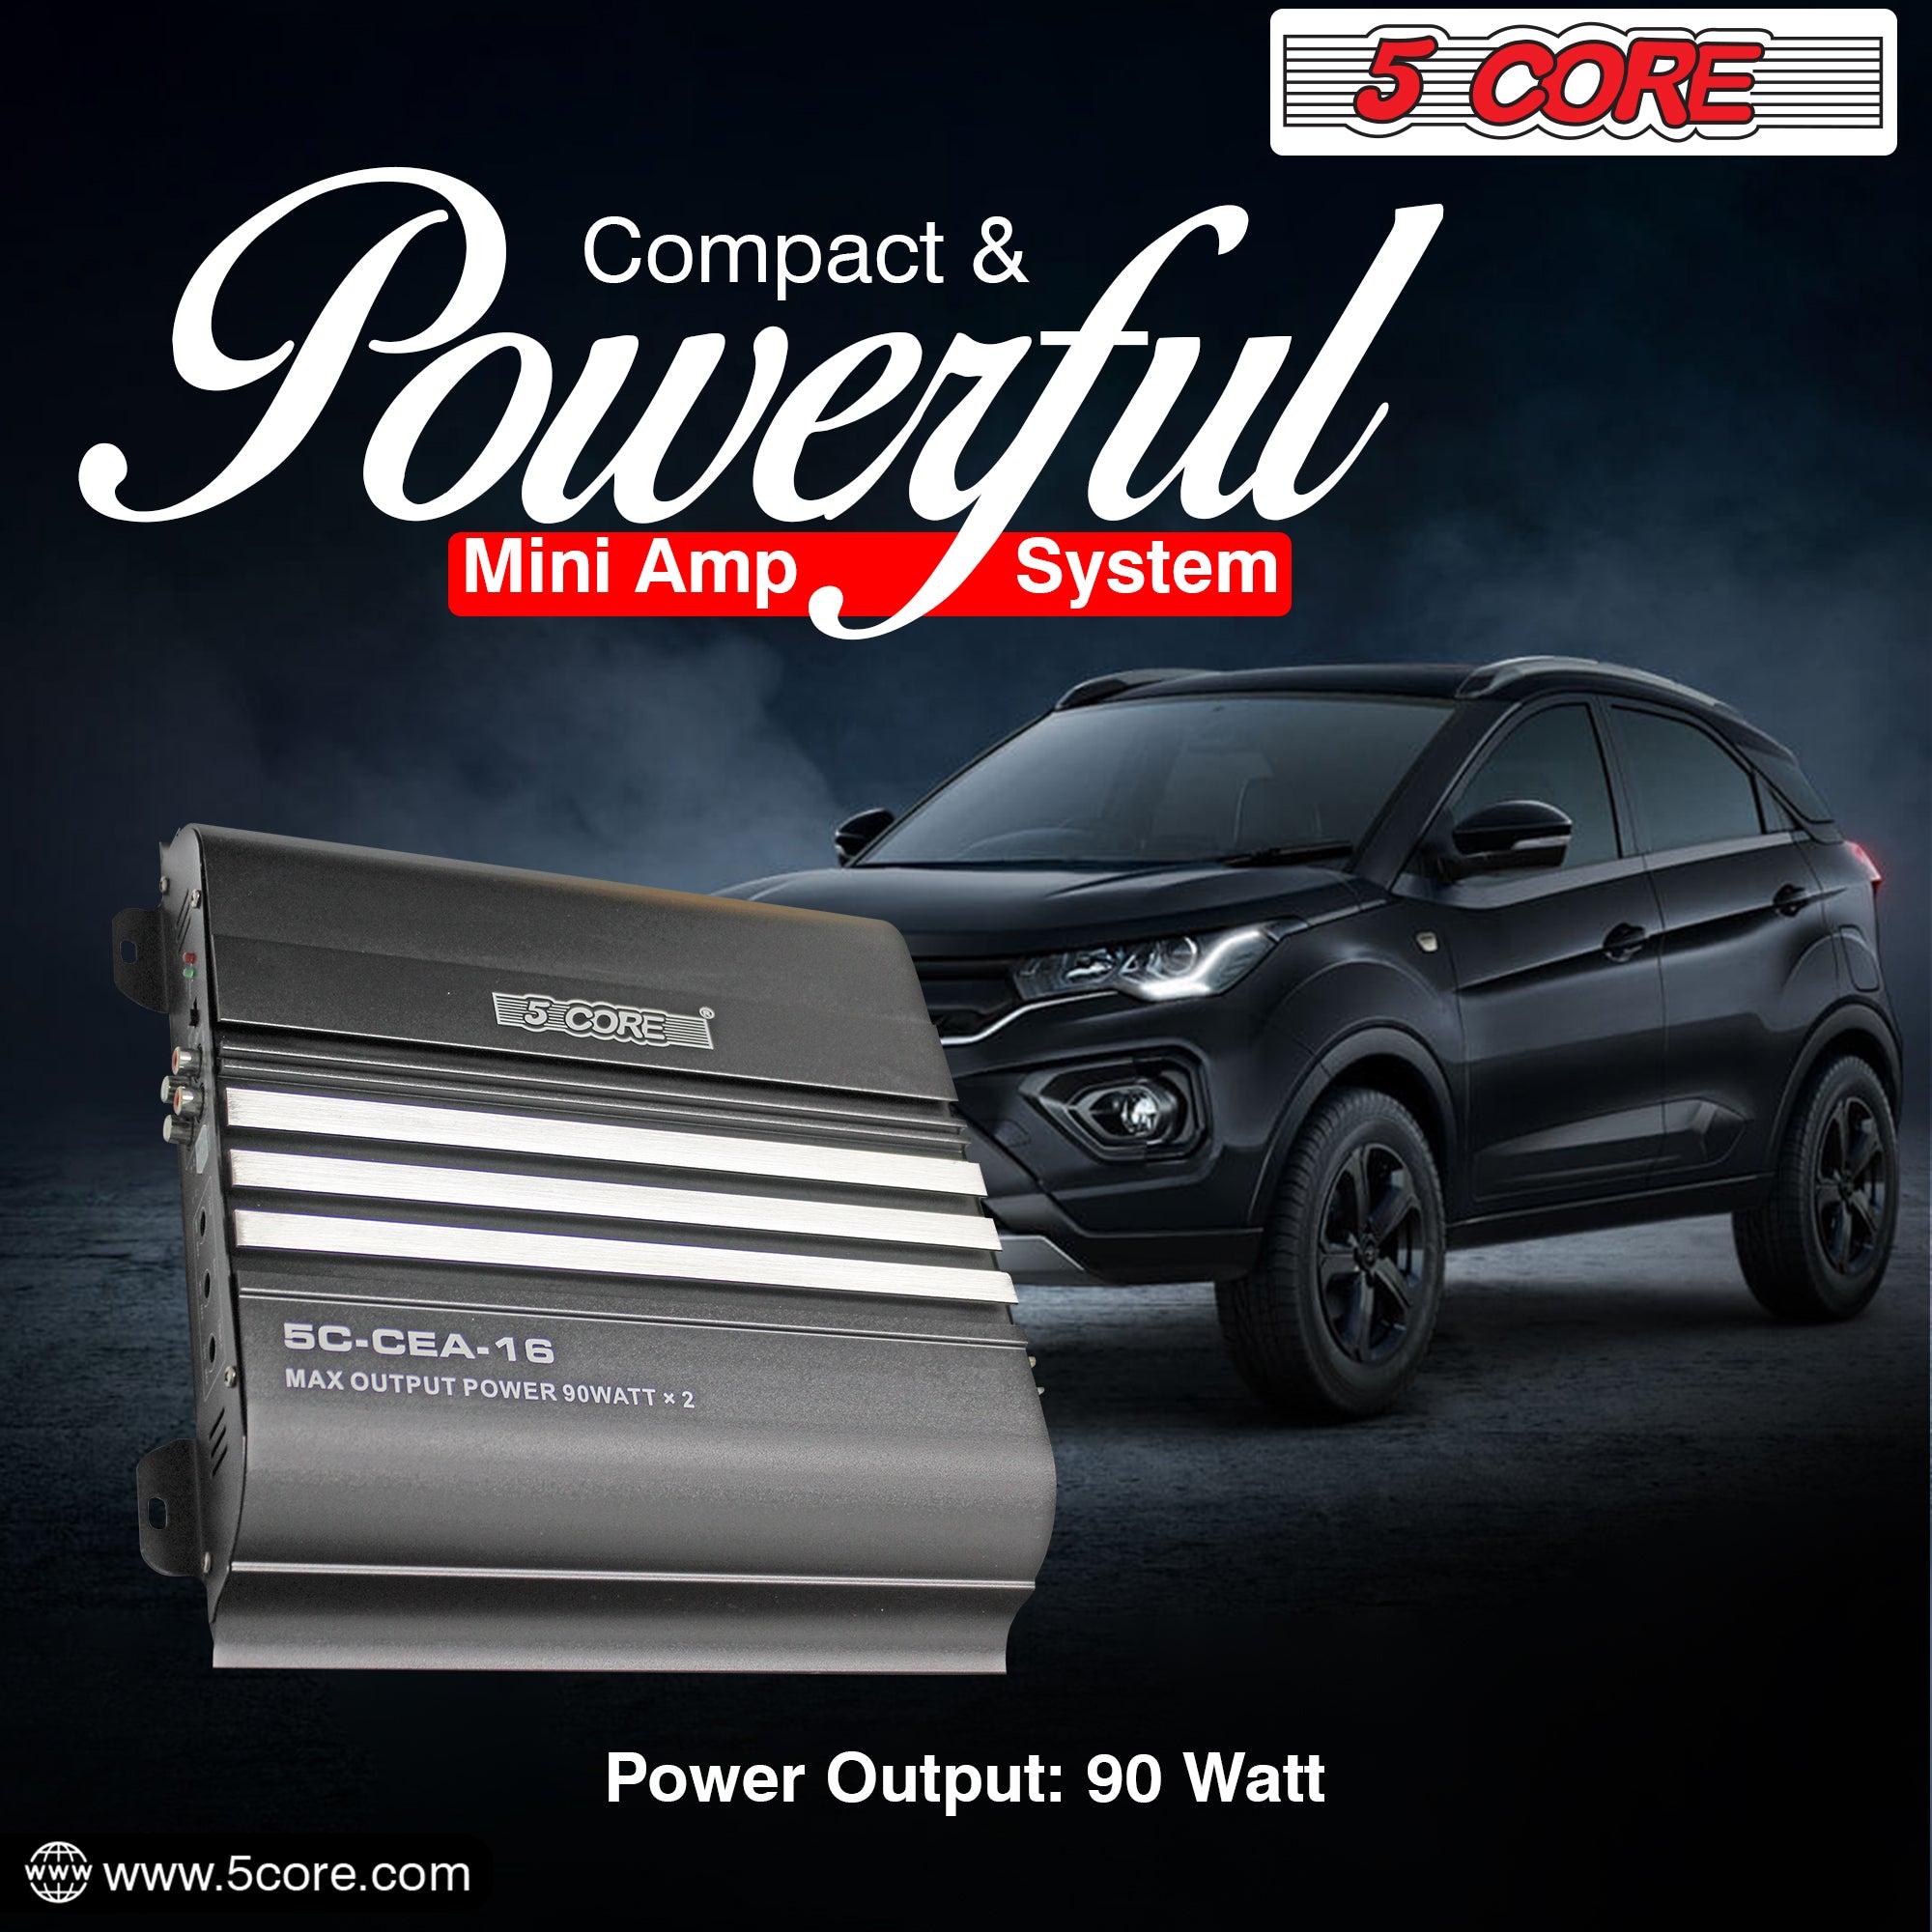 compact and powerful mini amp